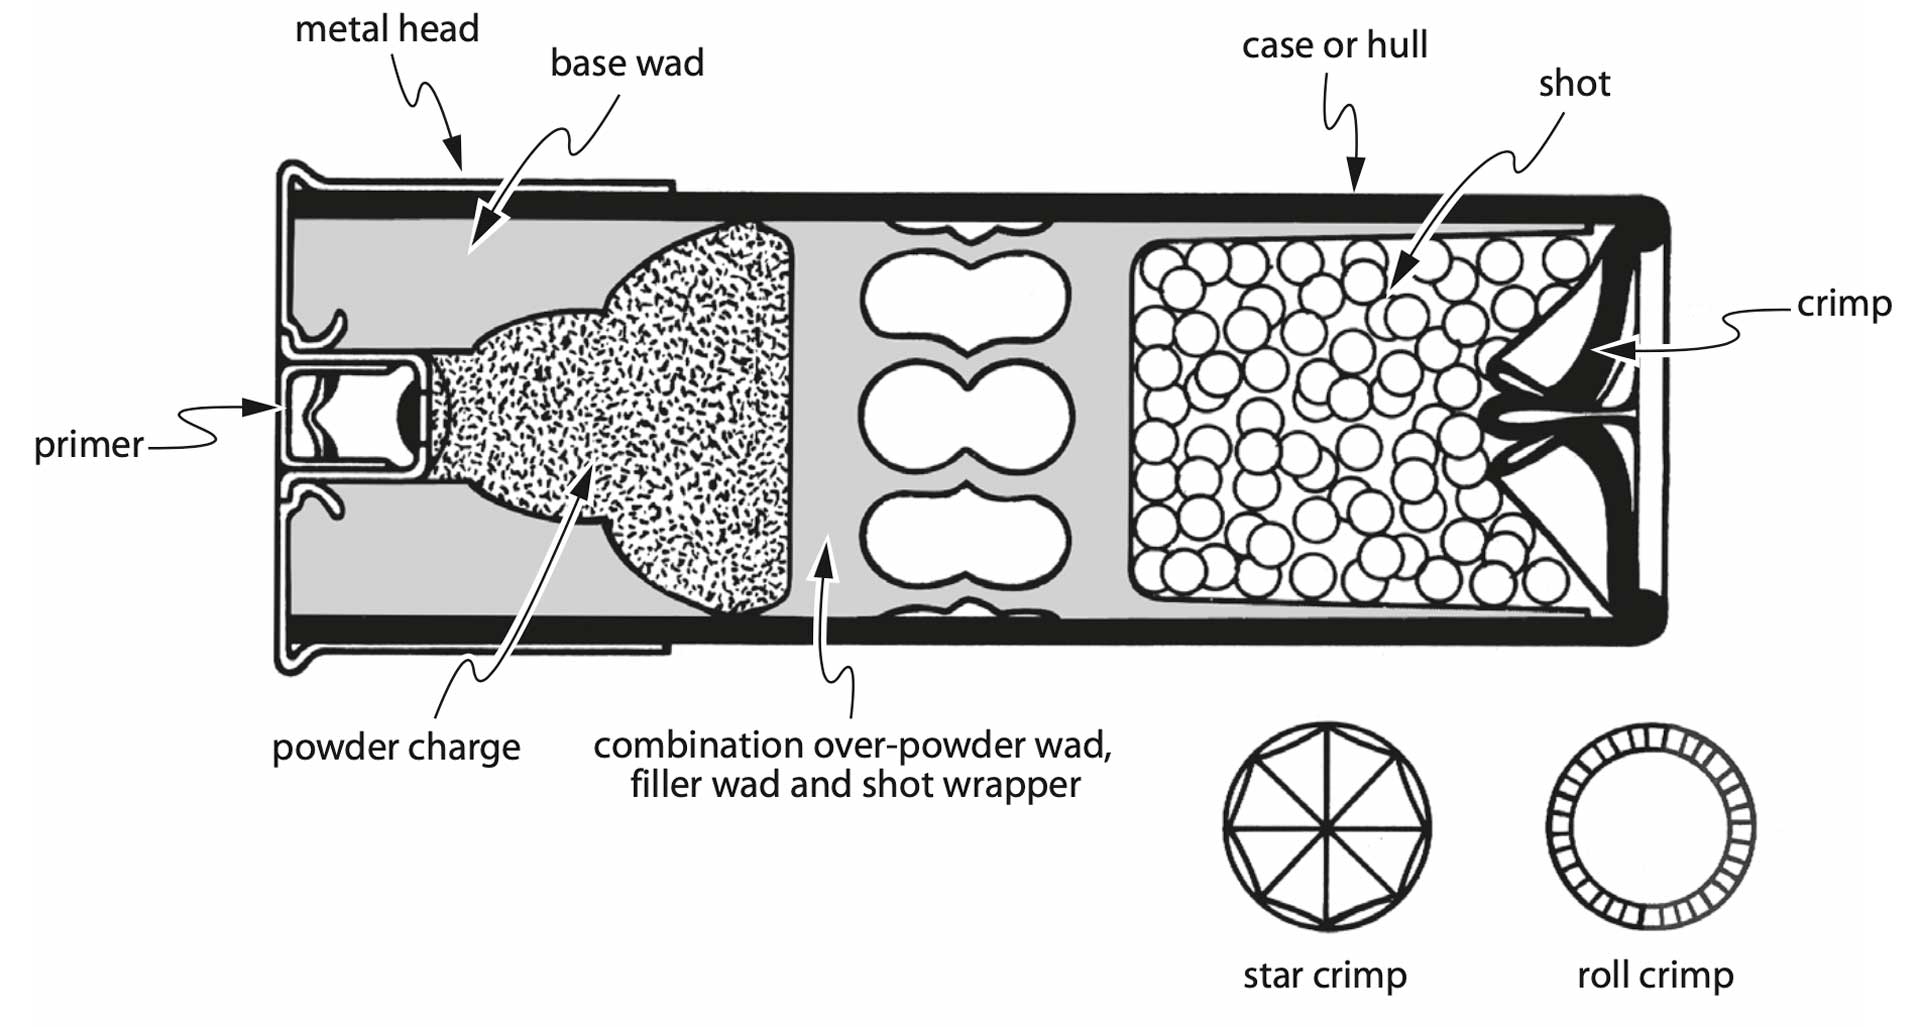 shotshell schematic drawing cutaway view black cylinder balls ammunition shell shotgun text on image noting components